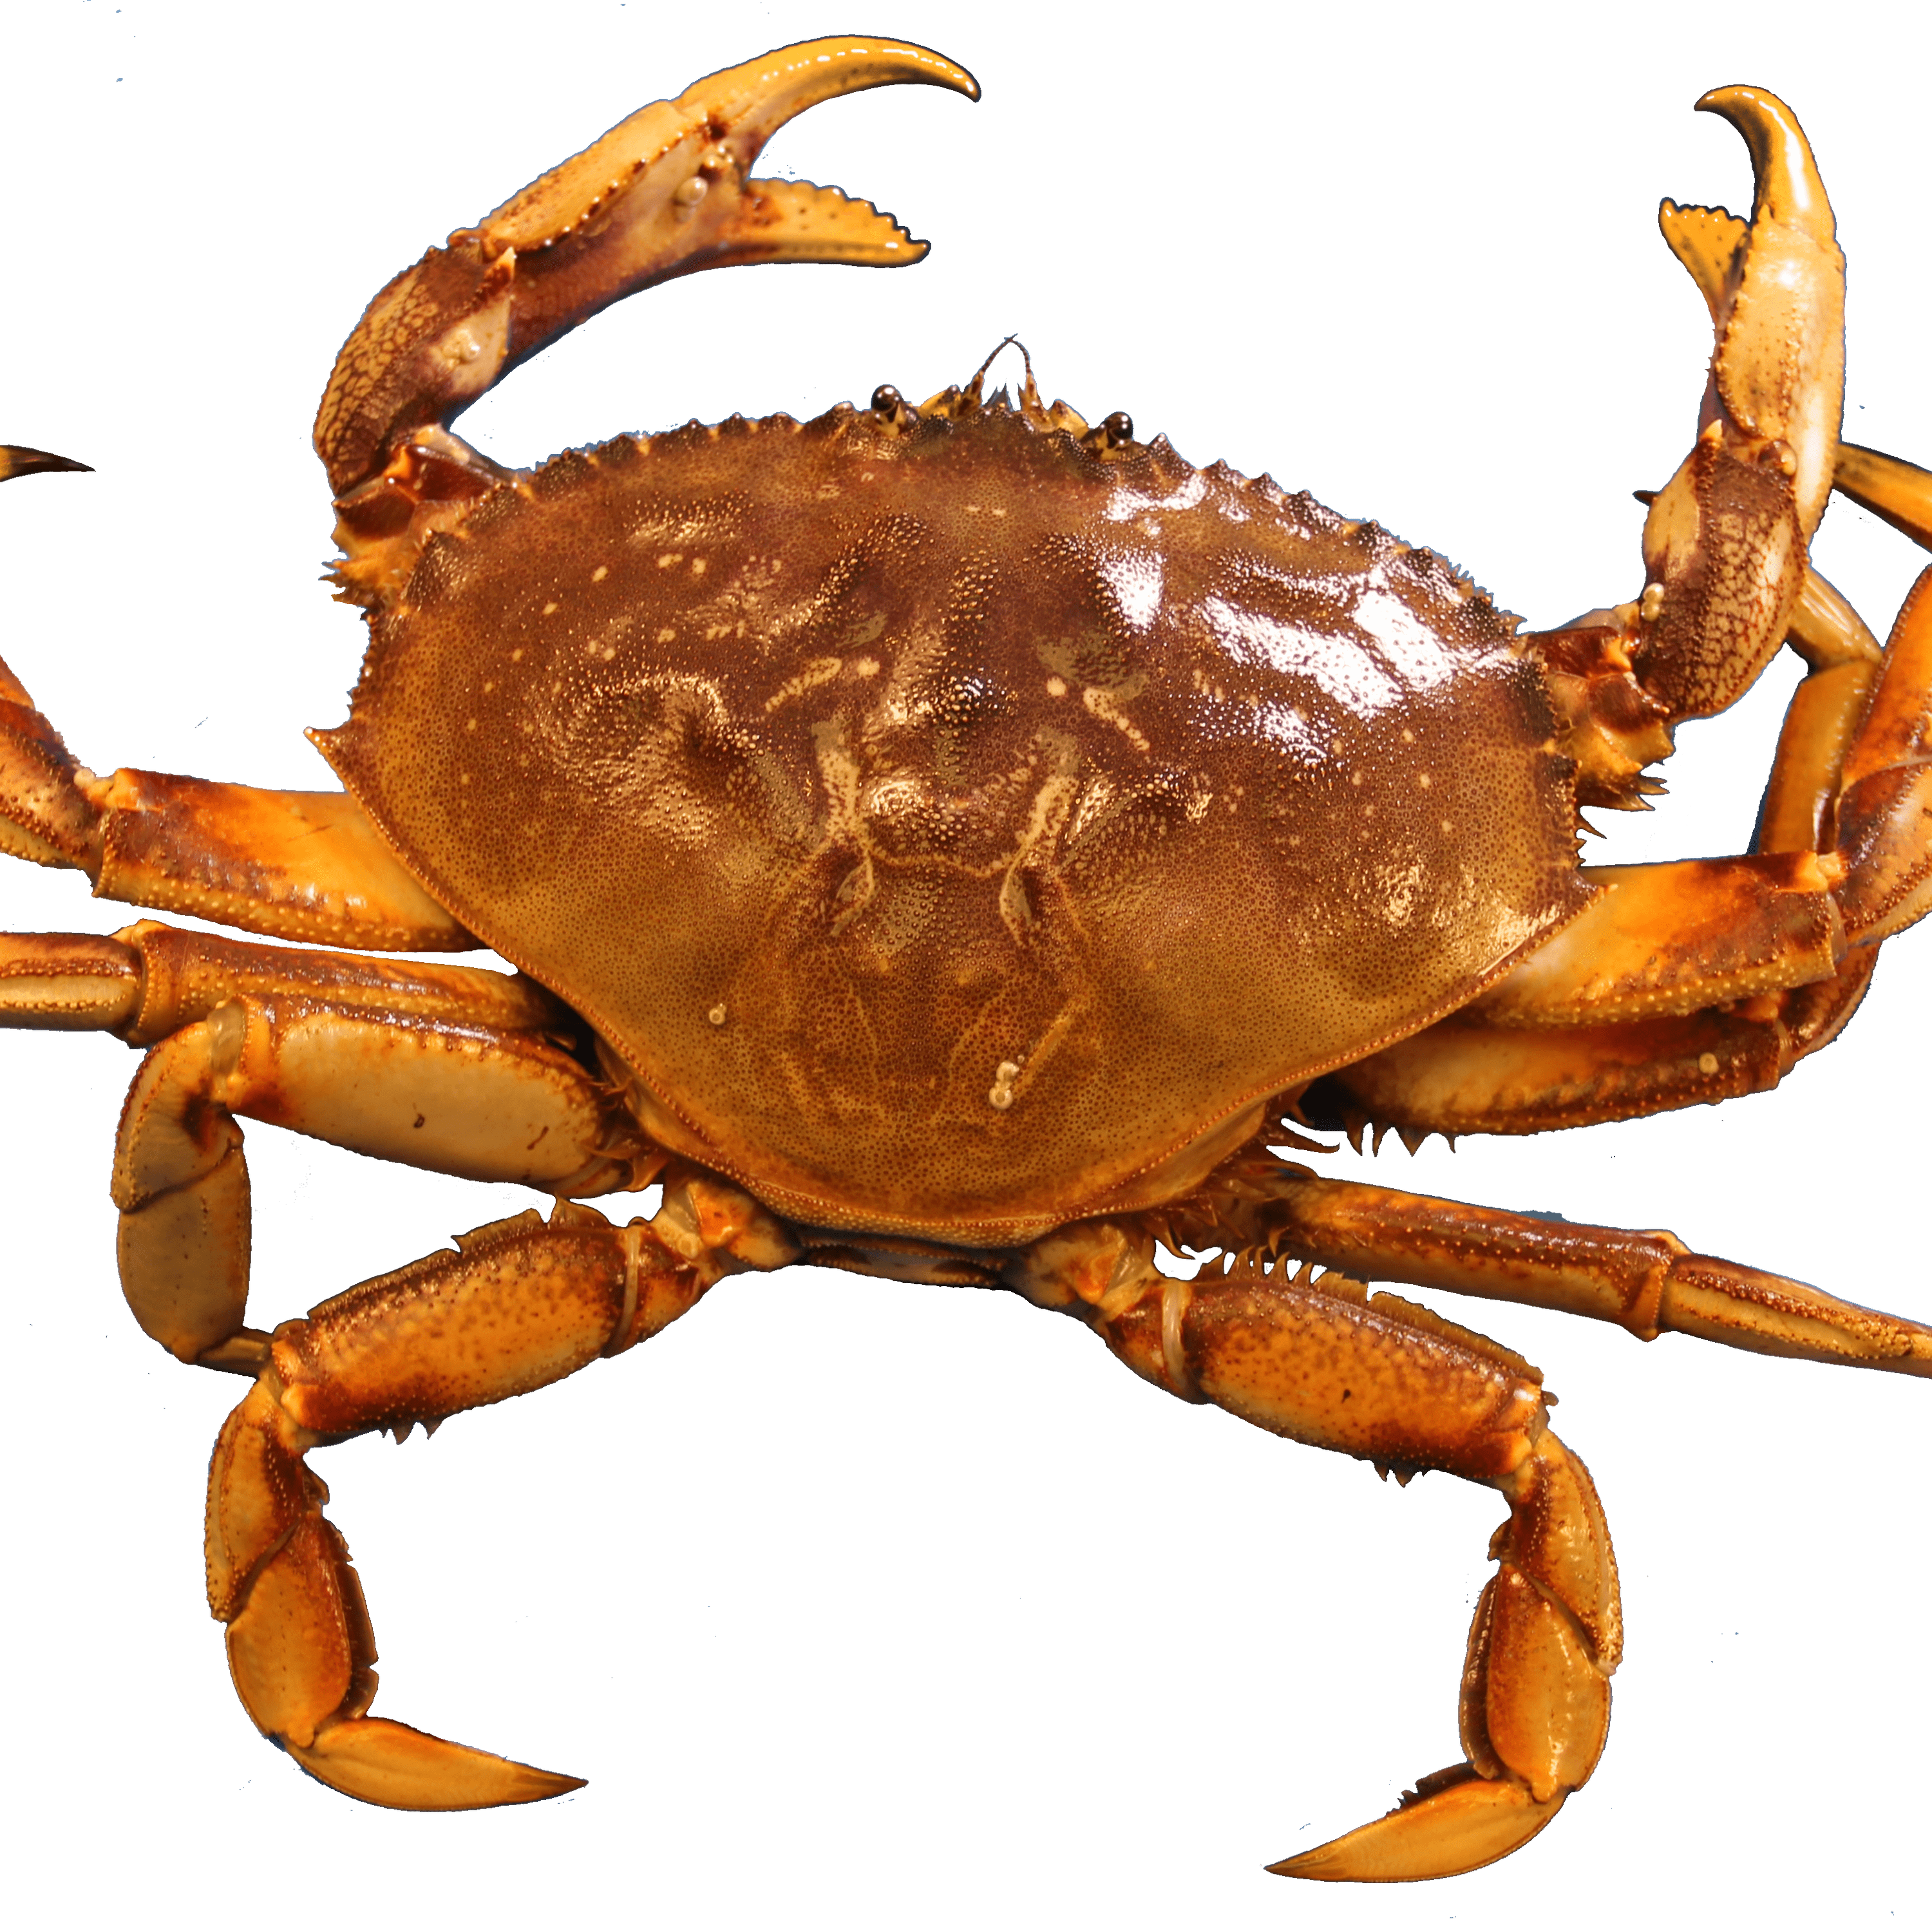 free png crab PNG images tran